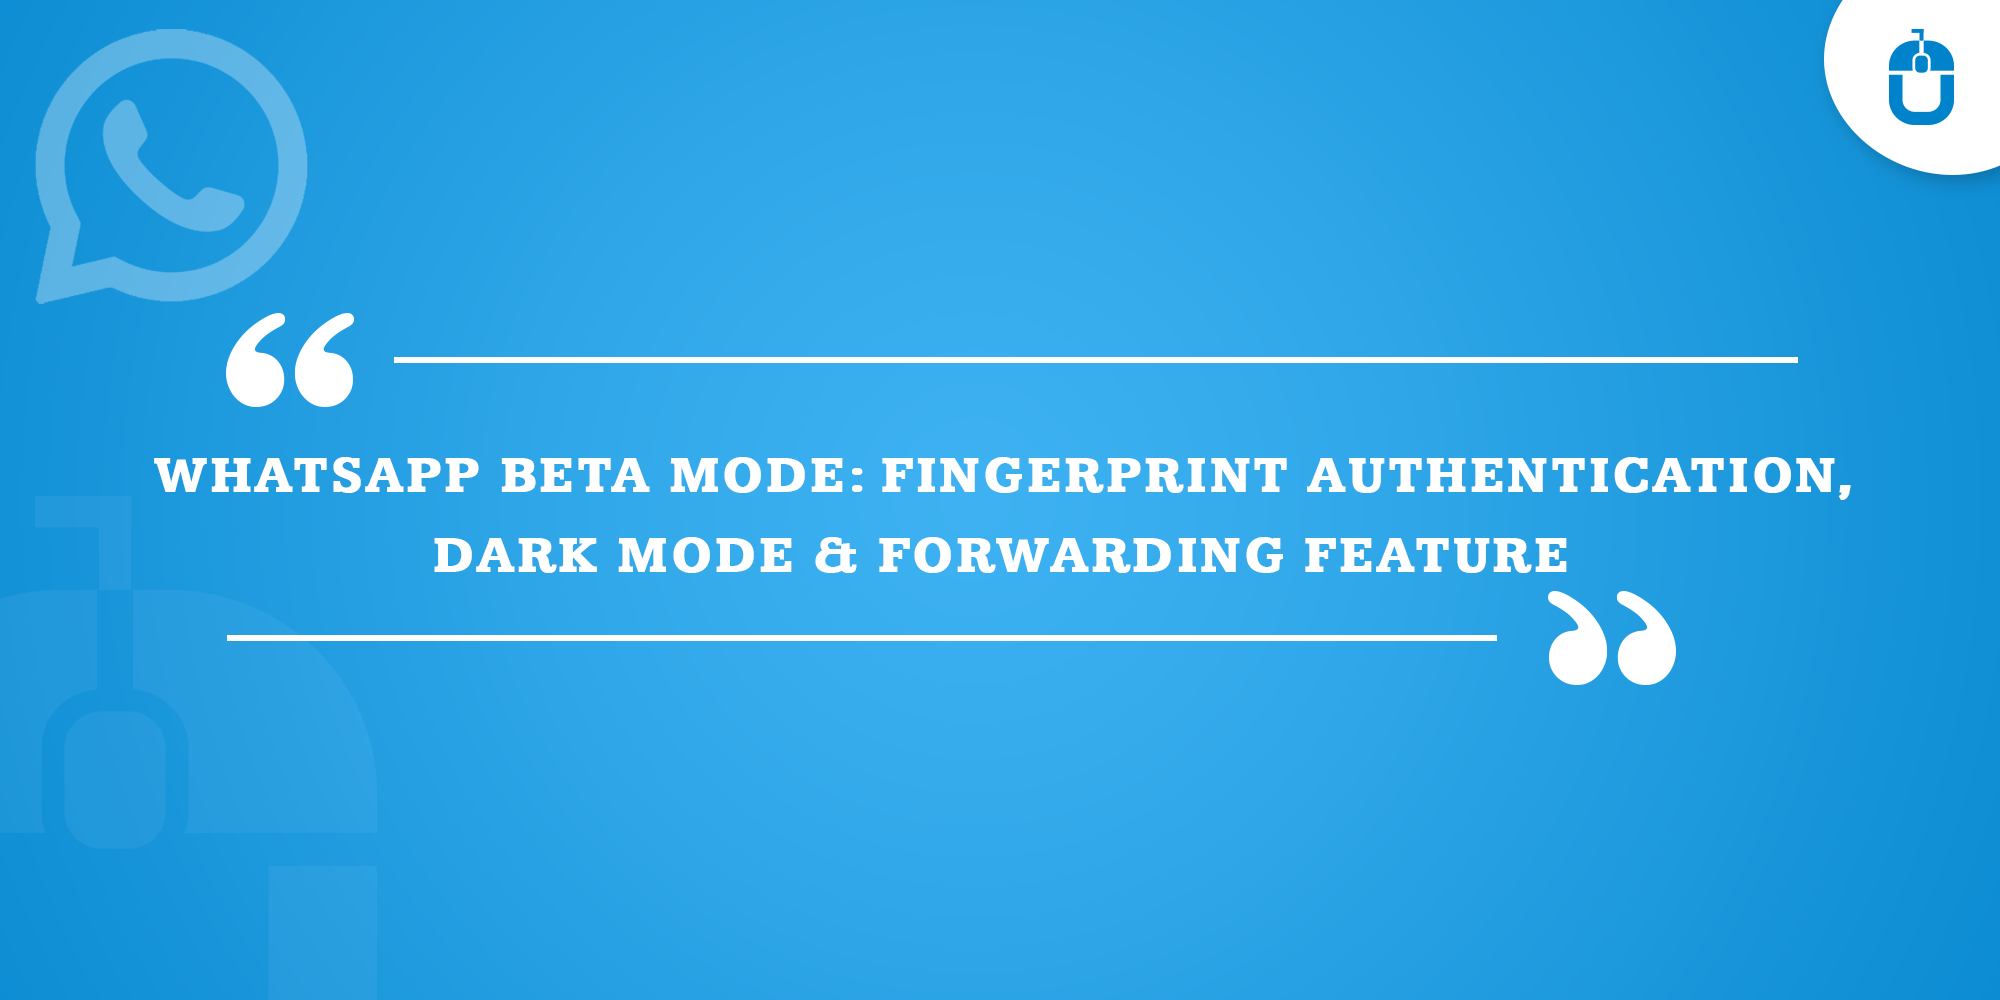 Whatsapp Beta Mode: Fingerprint Authentication, Dark Mode & Forwarding Feature